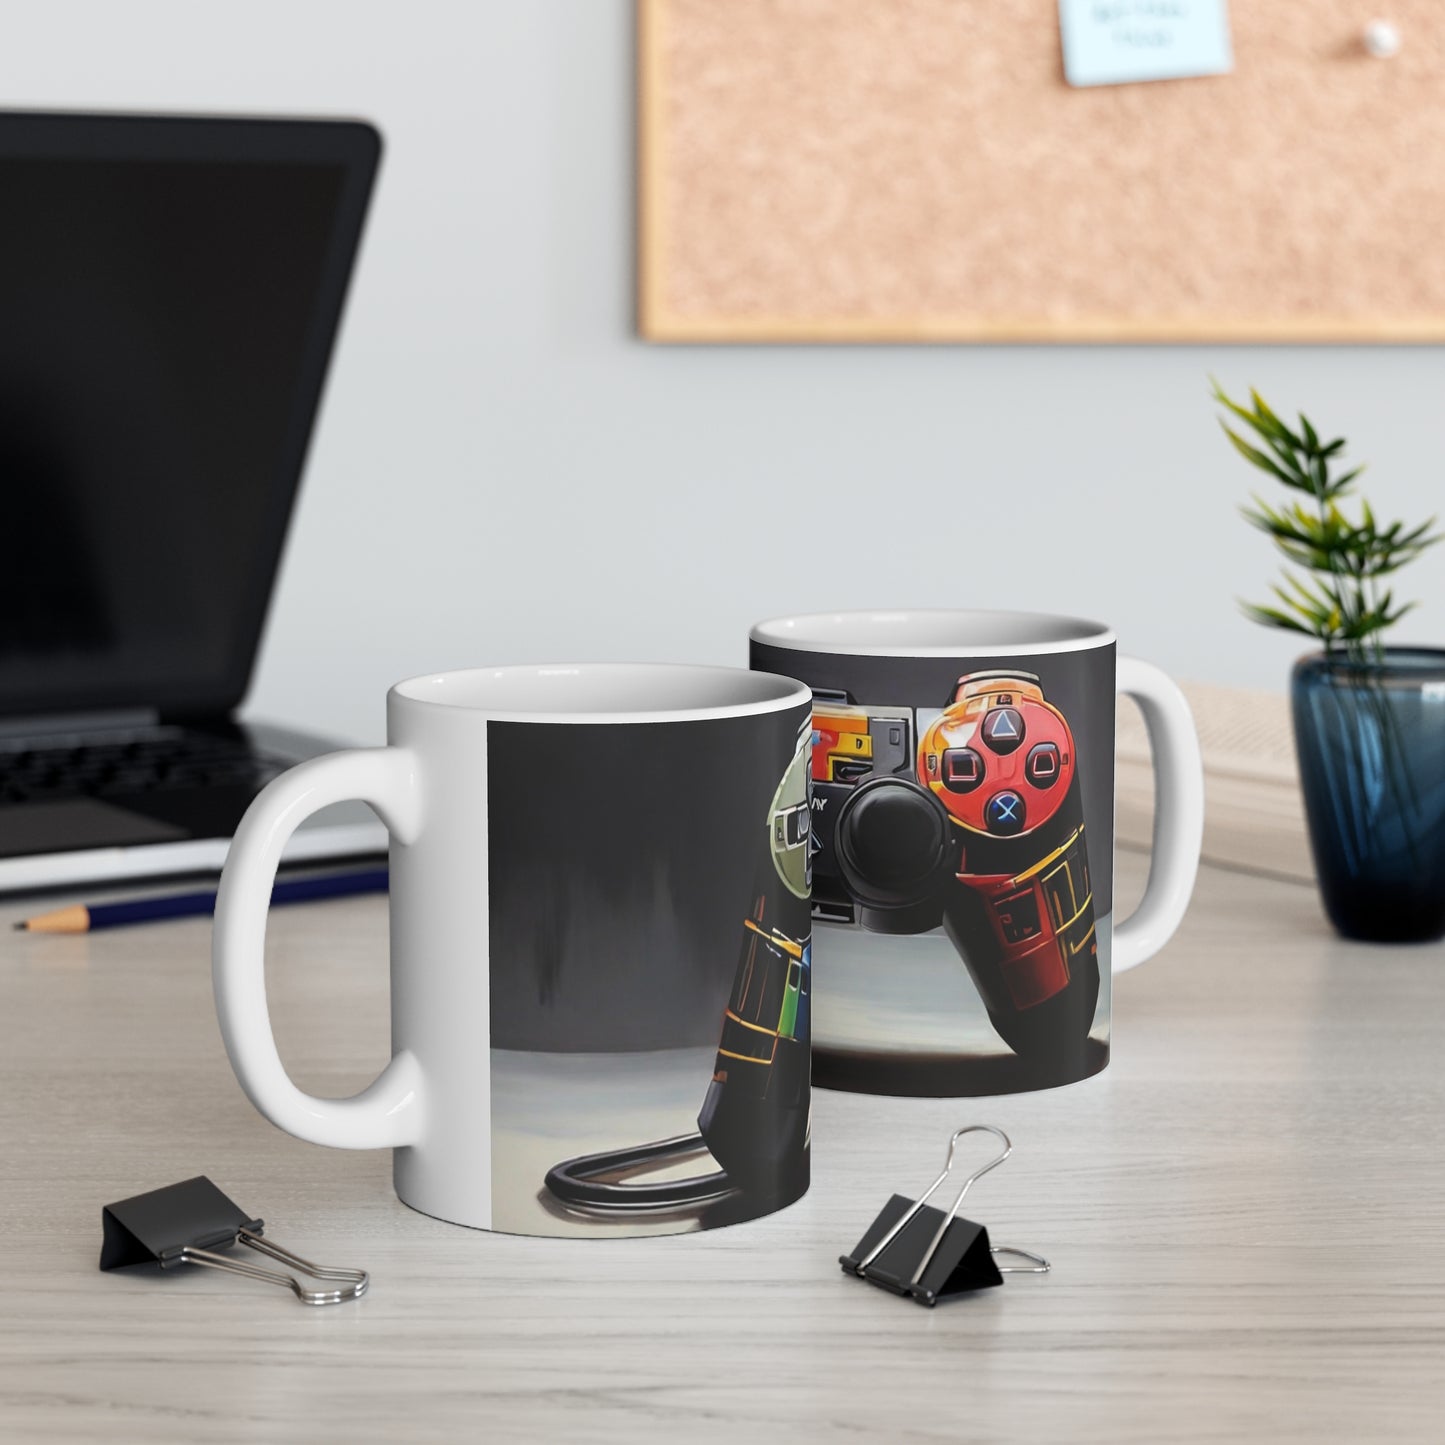 PlayStation Controller Artwork Mug - Ceramic Coffee Mug 11oz